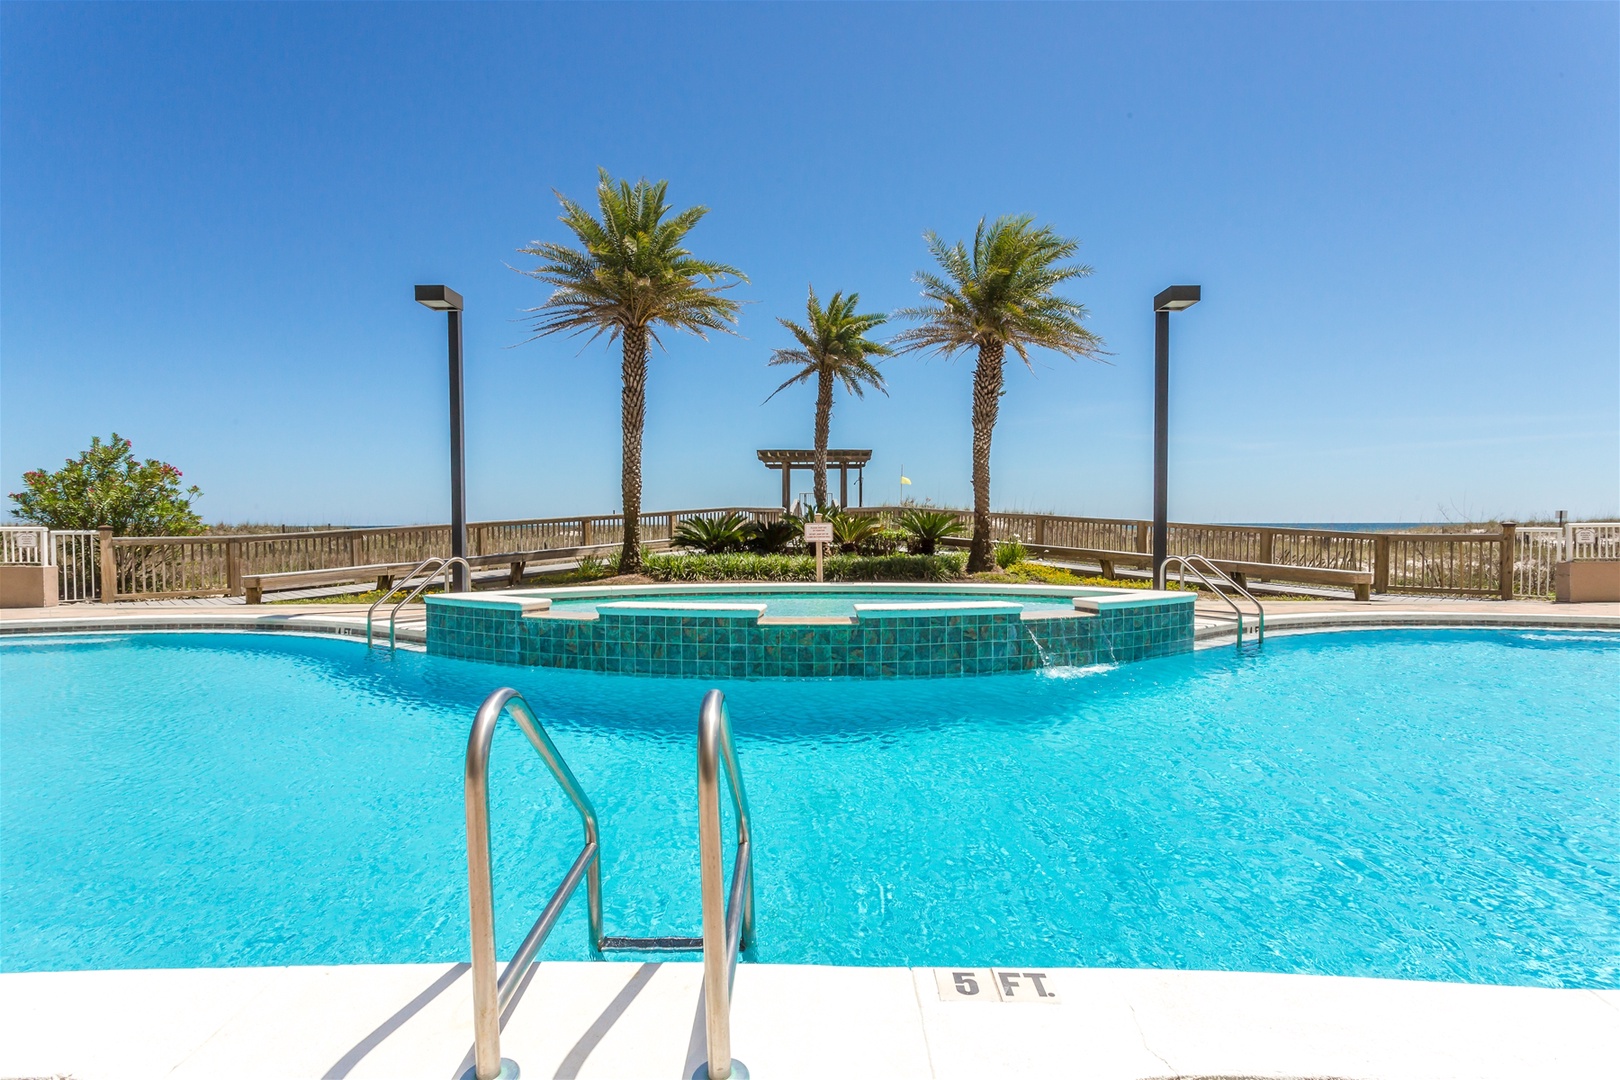 Spanish Key Beach Resort Hot Tub And Pool